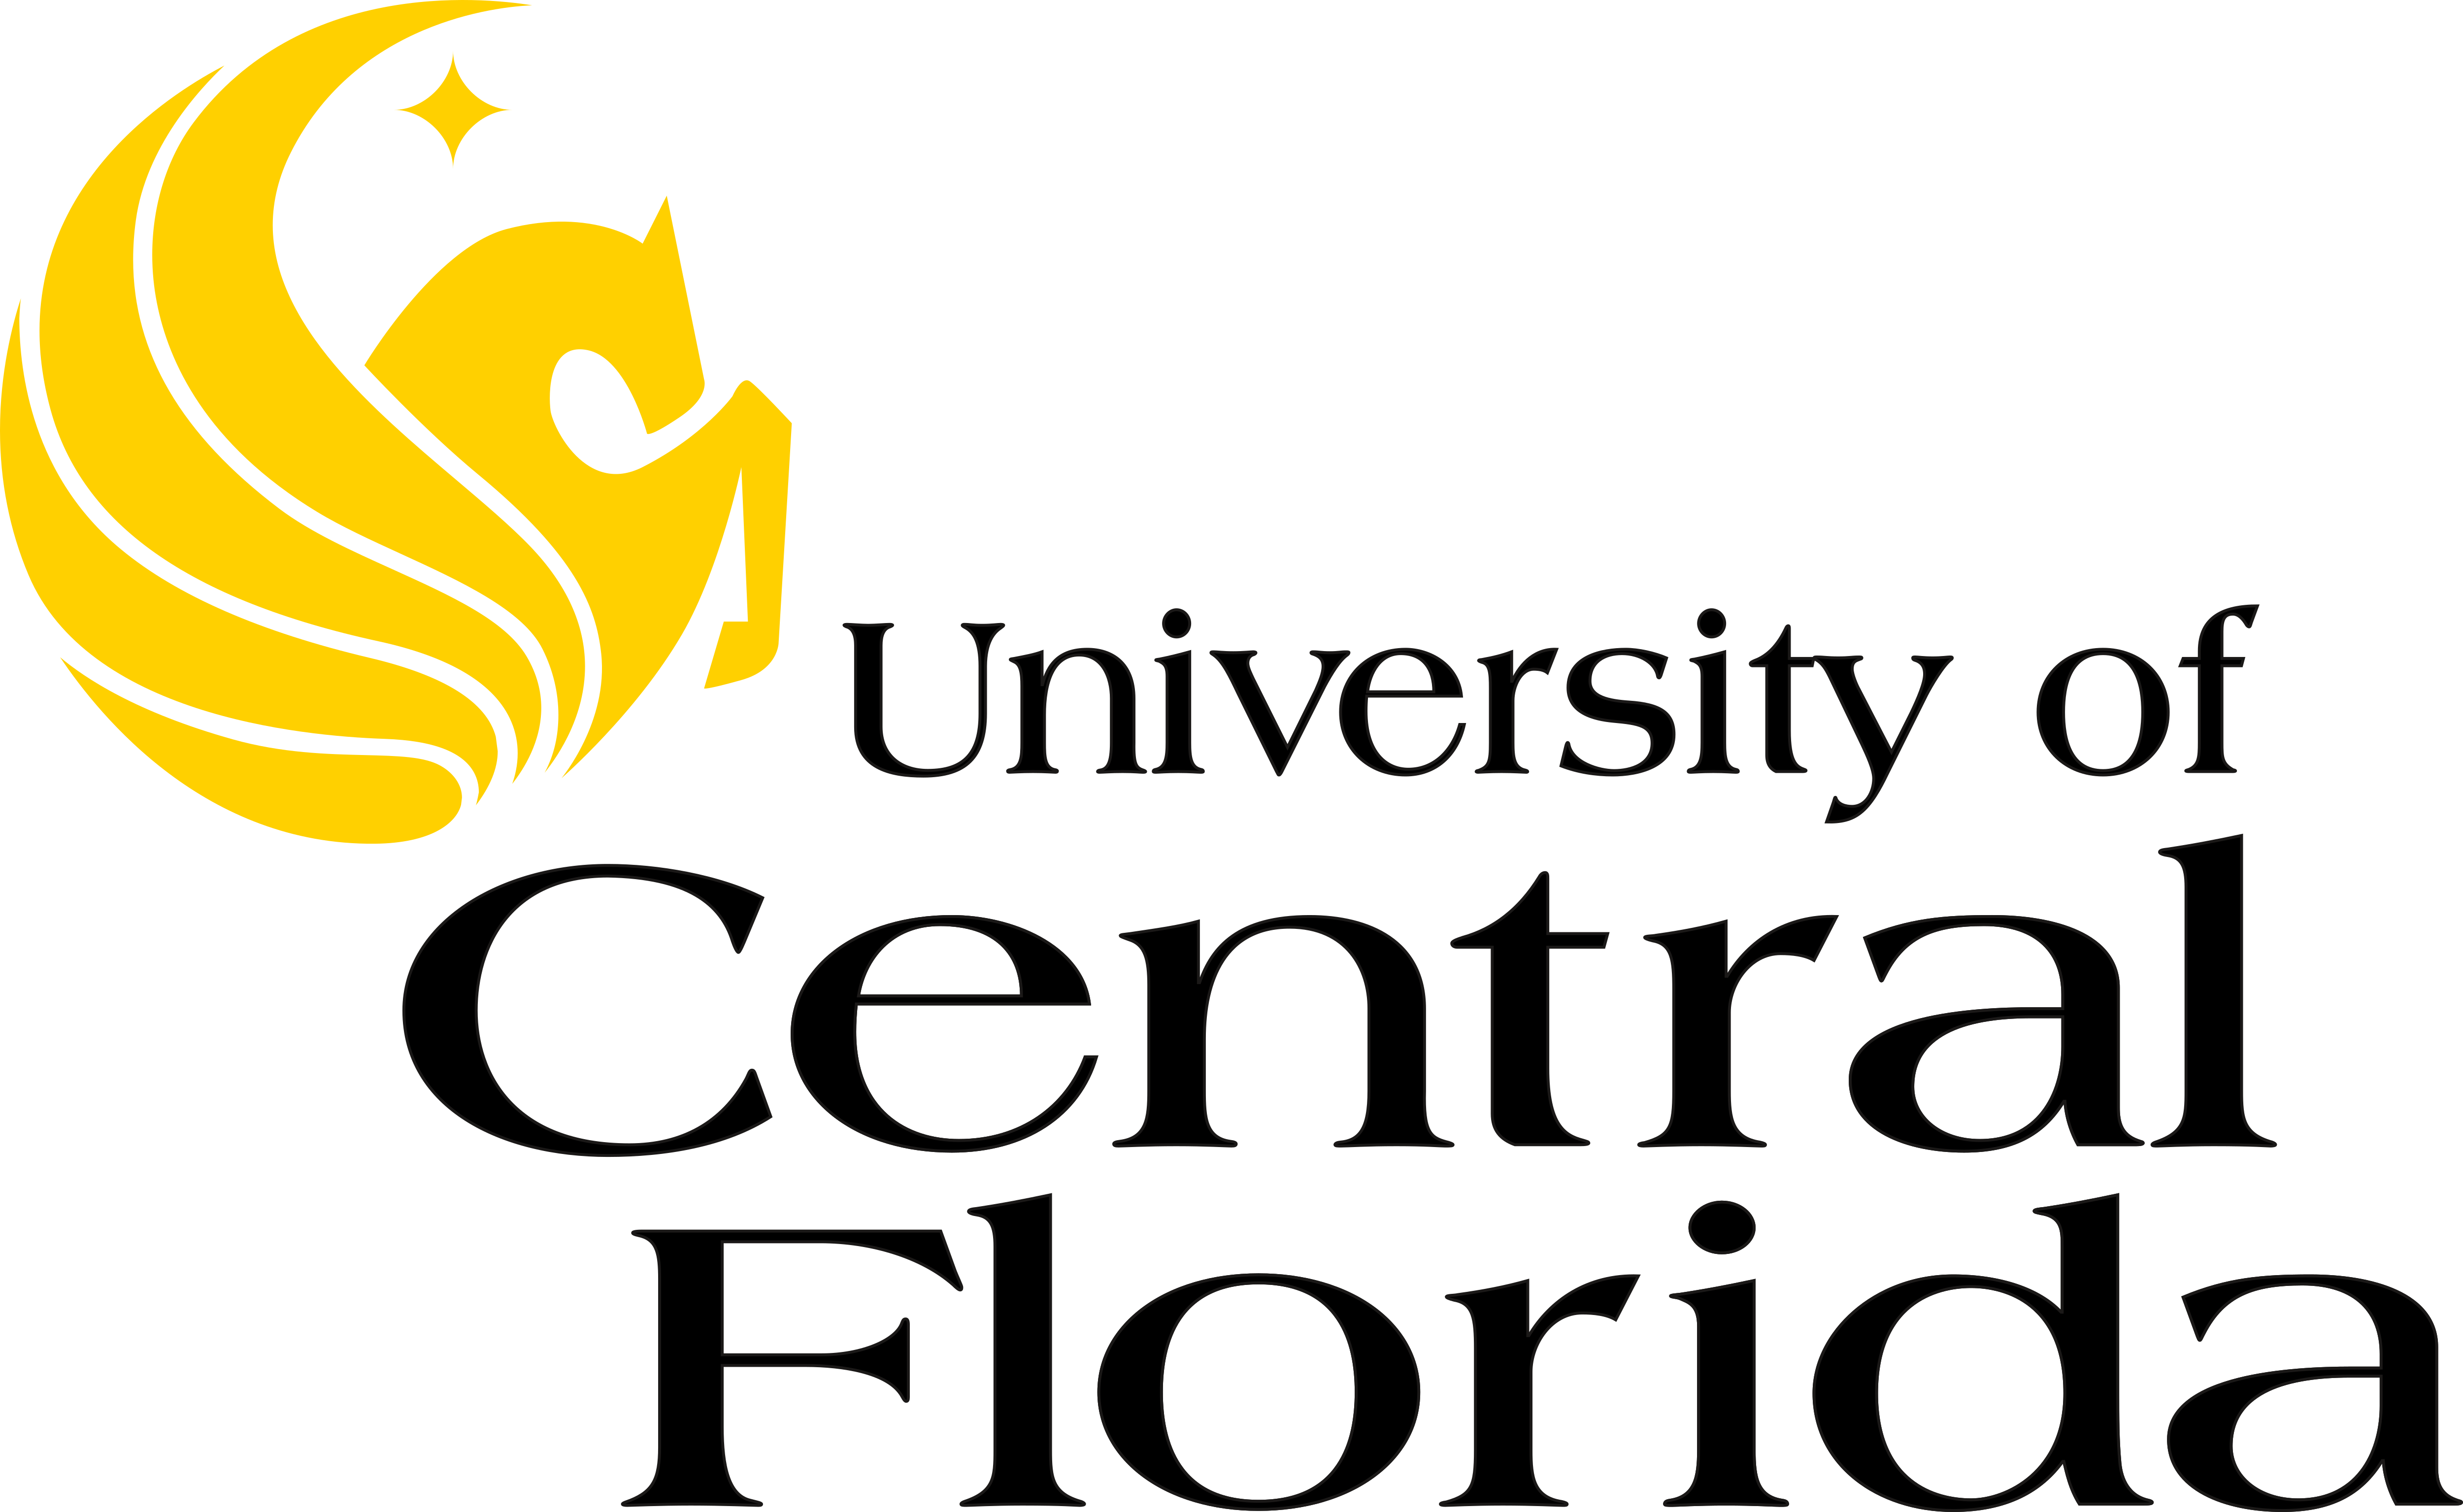 University of Central Florida – Ladda ner logotyper